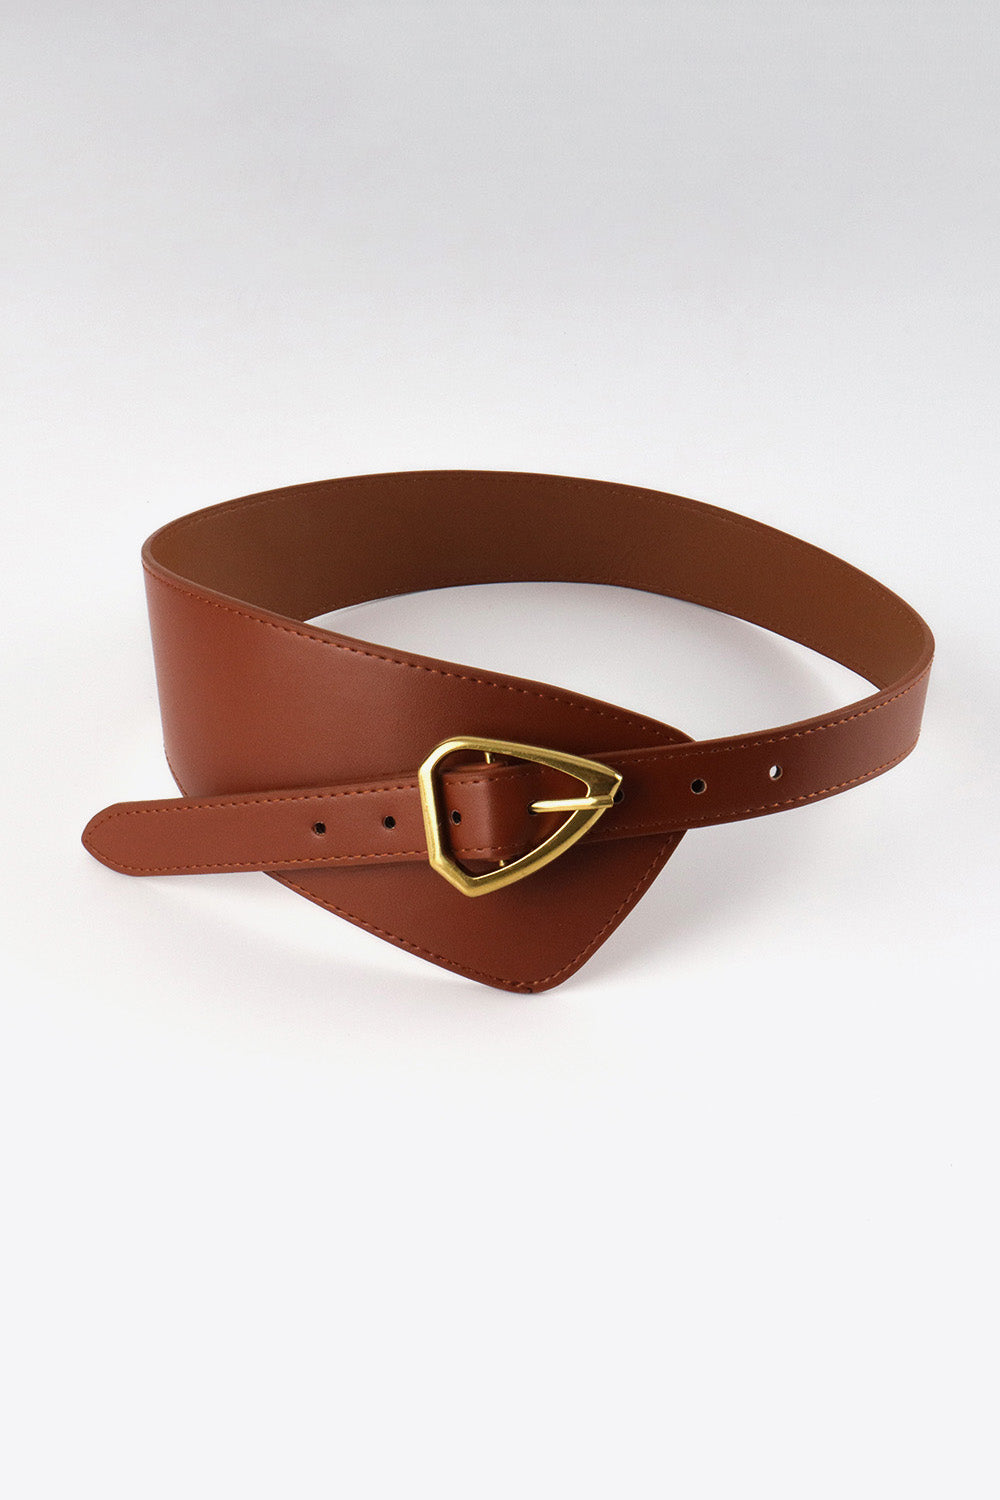 Jessica Anne Beauty Irregular PU Leather Belt